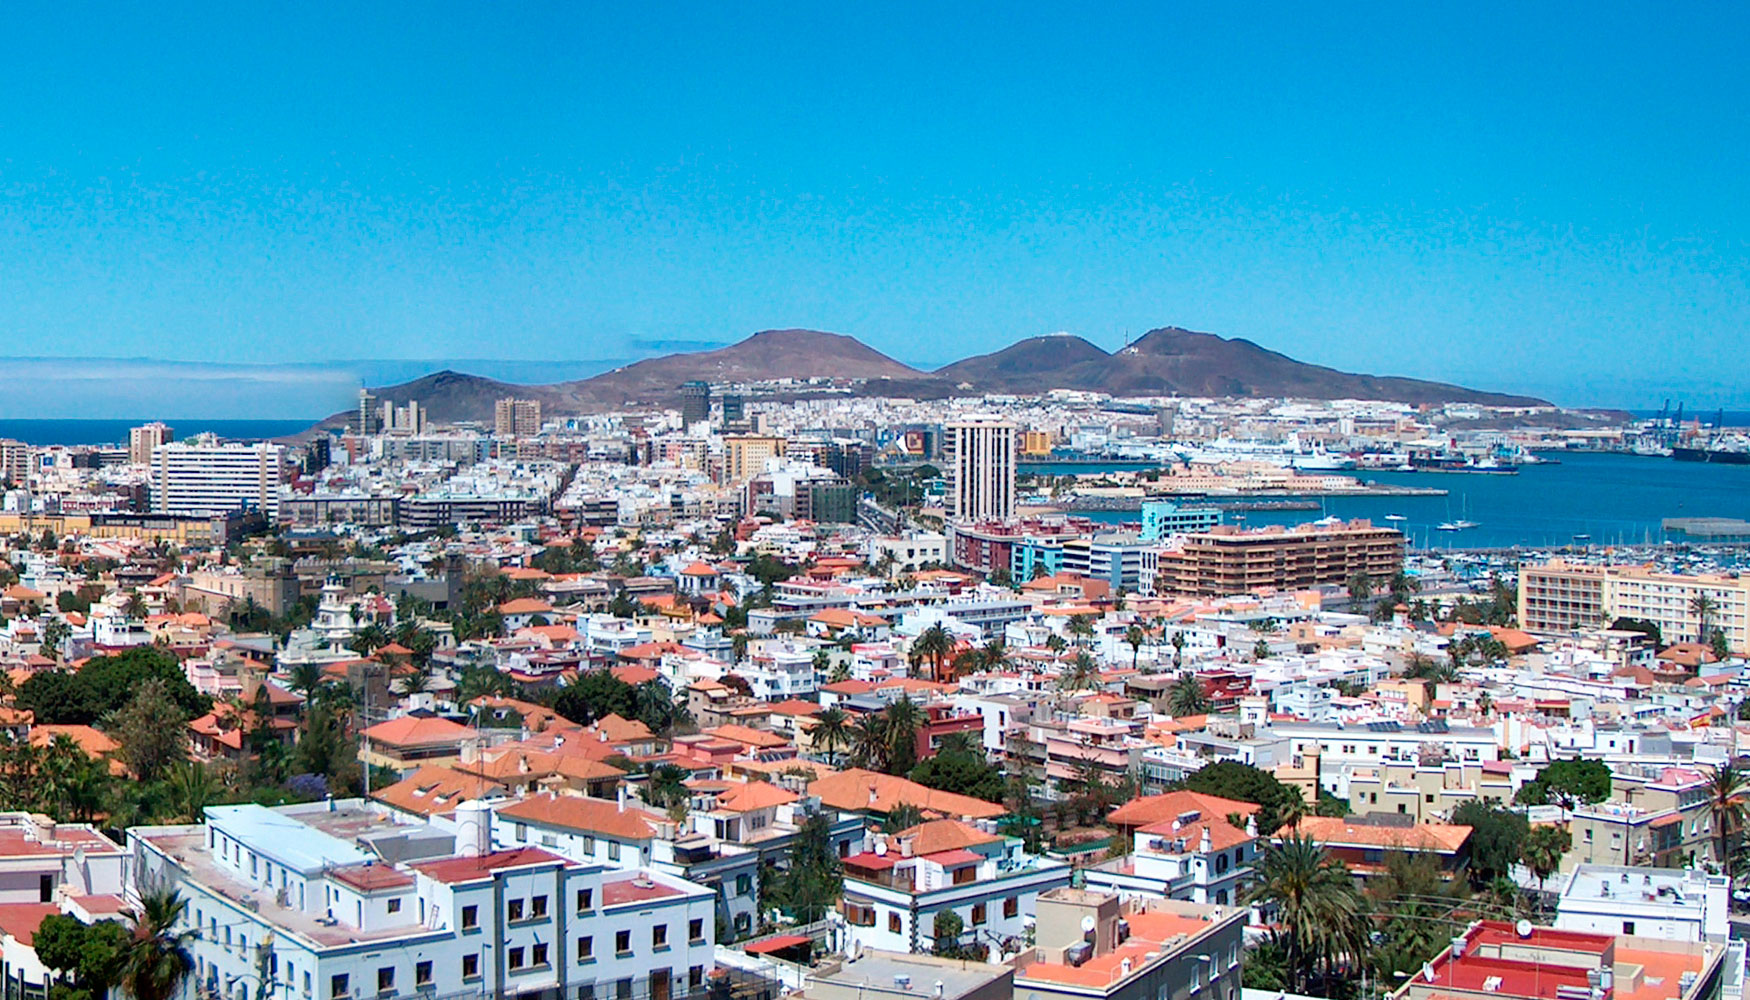 Imagen panormica de Las Palmas de Gran Canaria. Foto: Matti Mattila